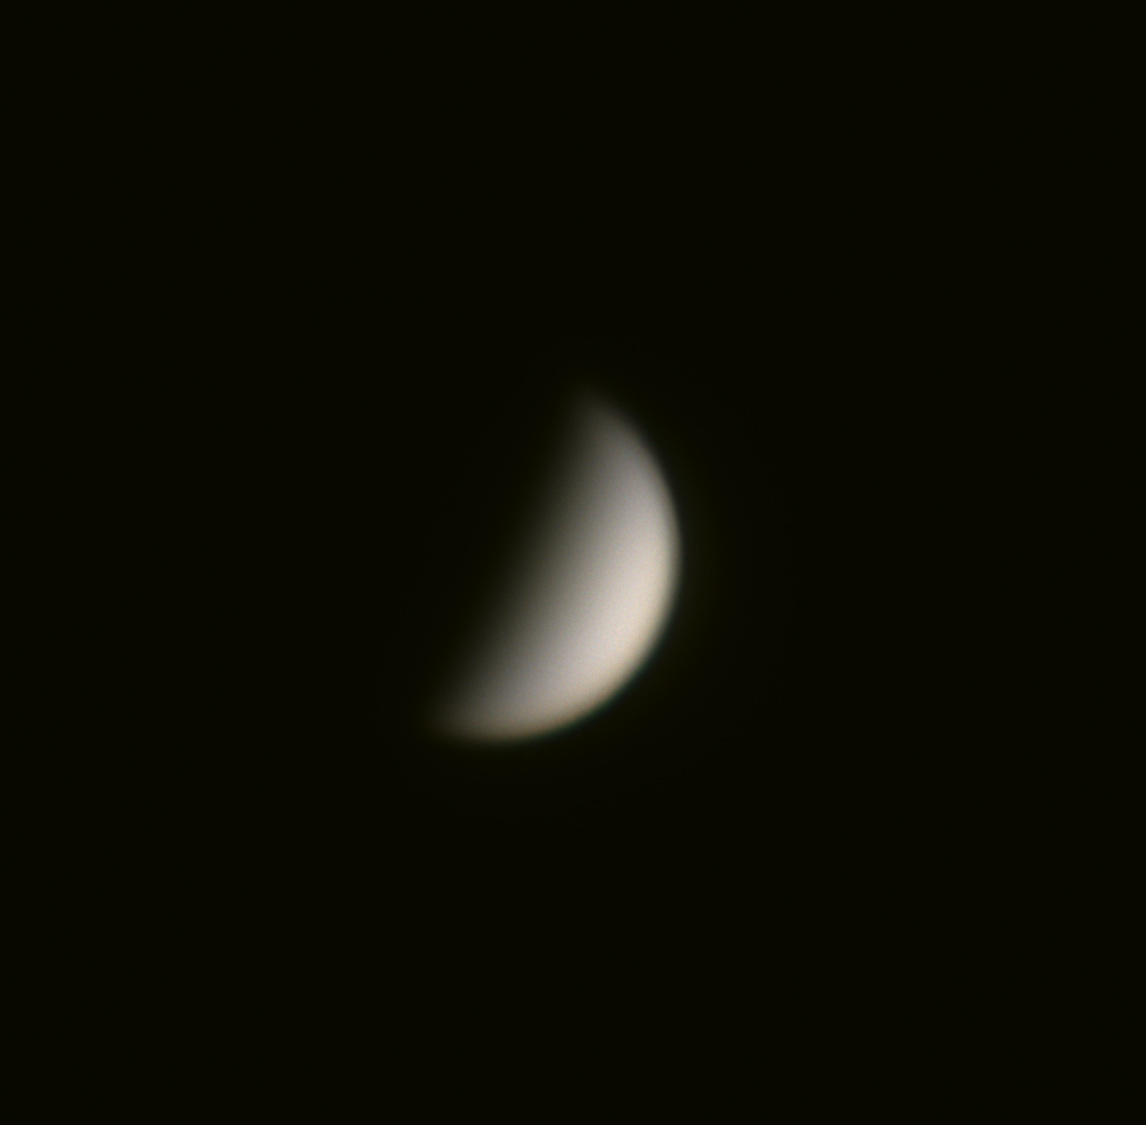 Venus, 20 January 2017